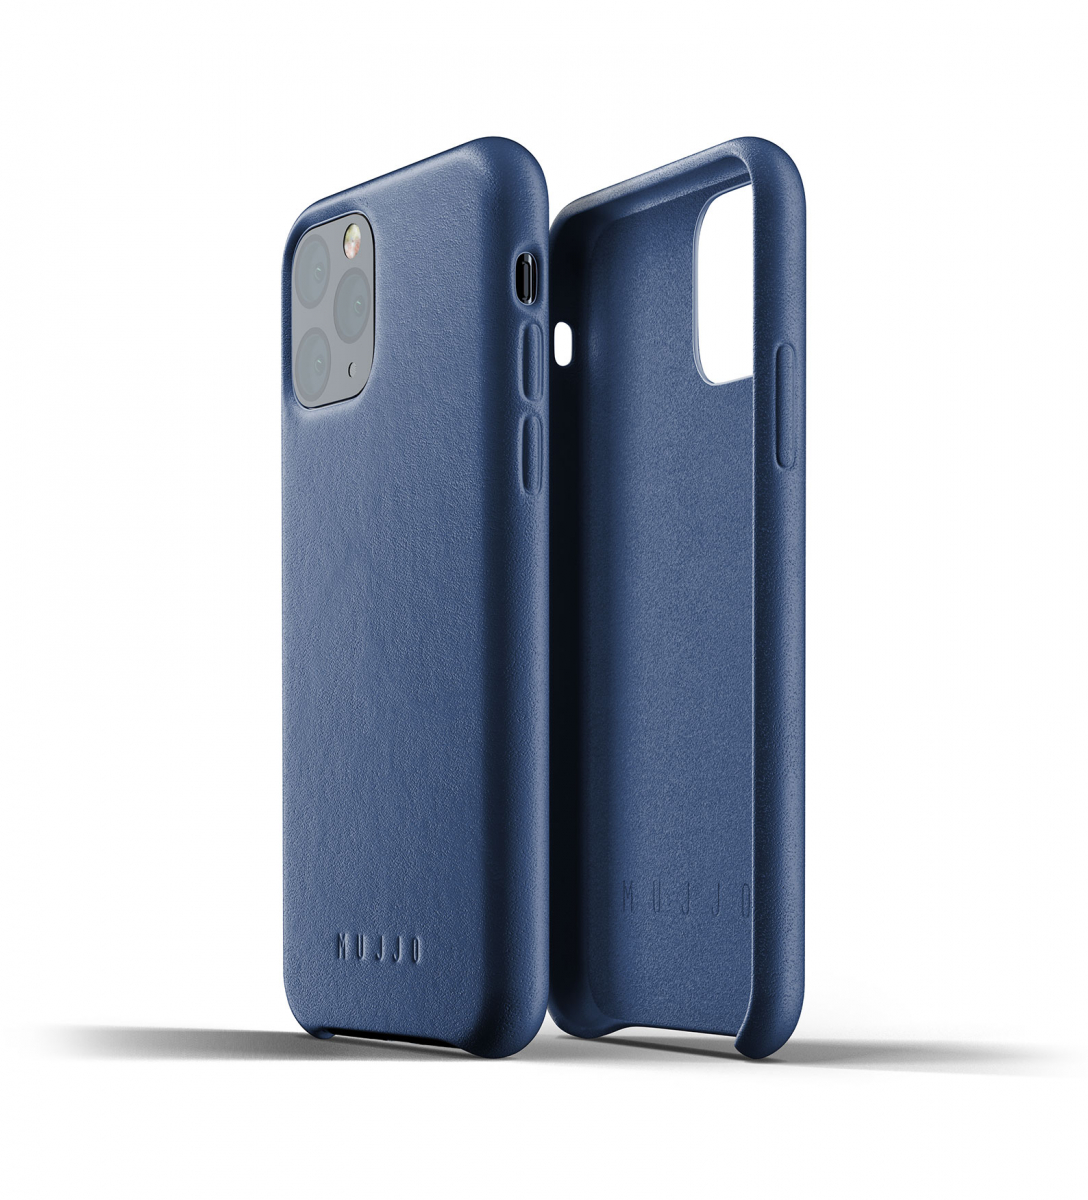 Чехол кожаный MUJJO для iPhone 11 Pro Full Leather, Monaco Blue